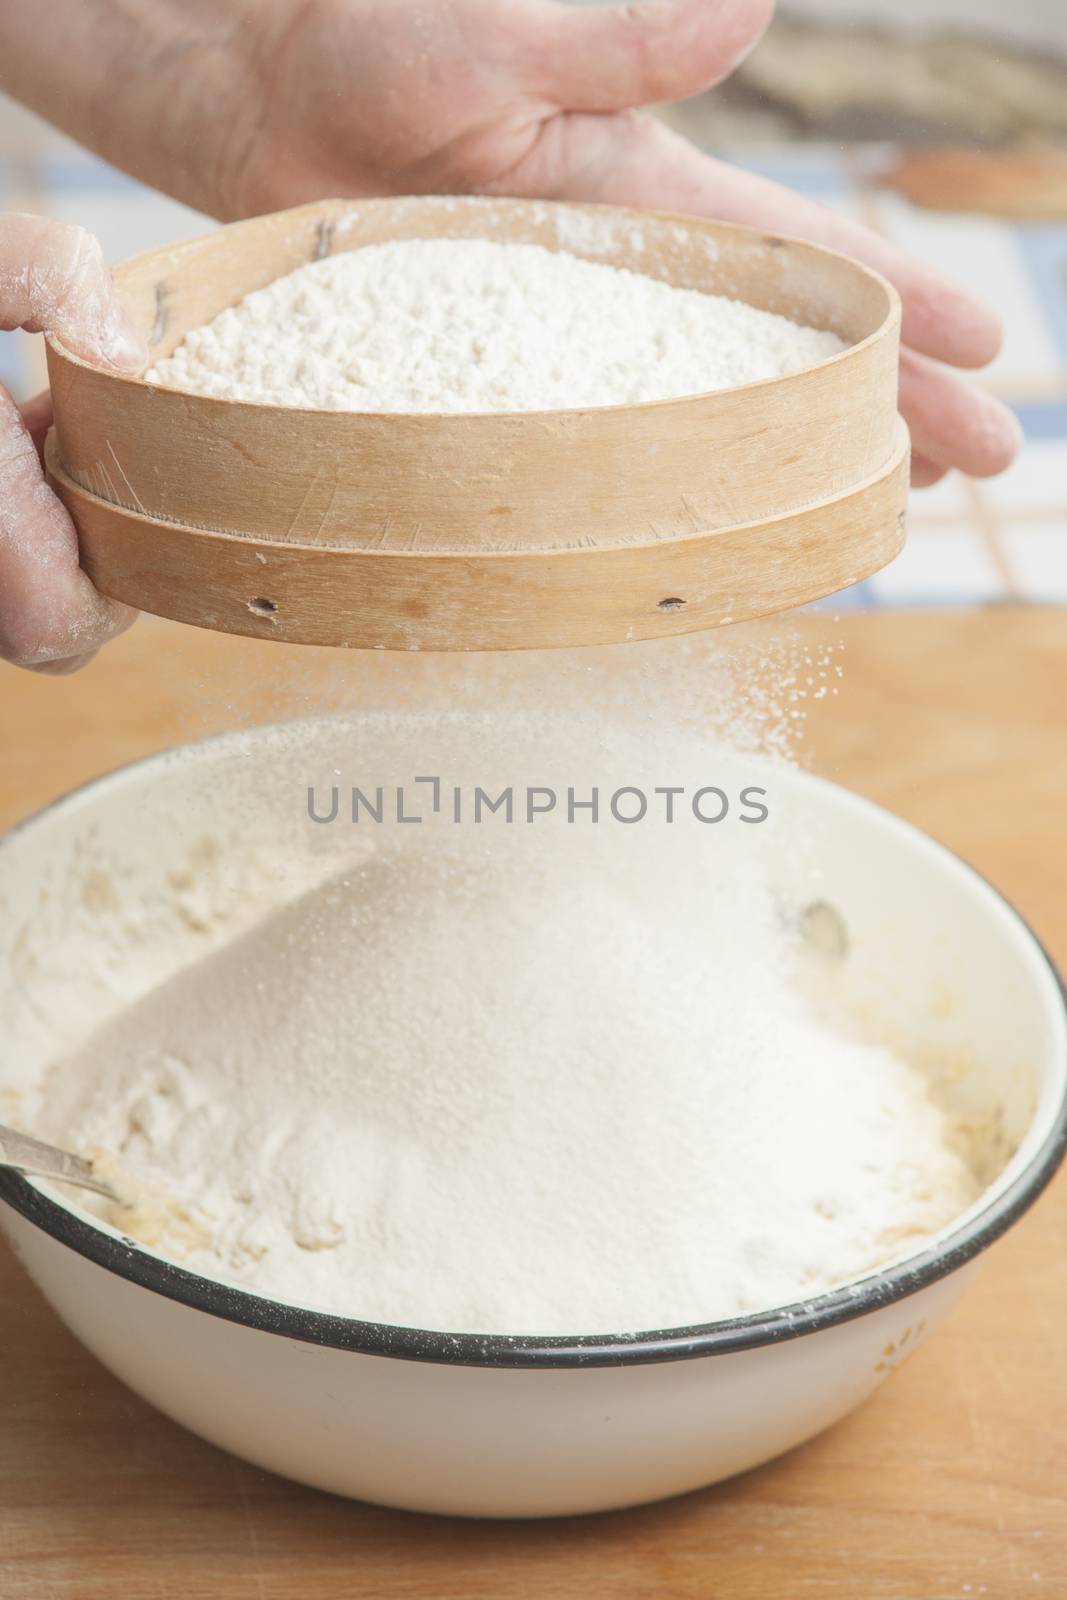 Women's hands preparing flour before baking pie by kozak